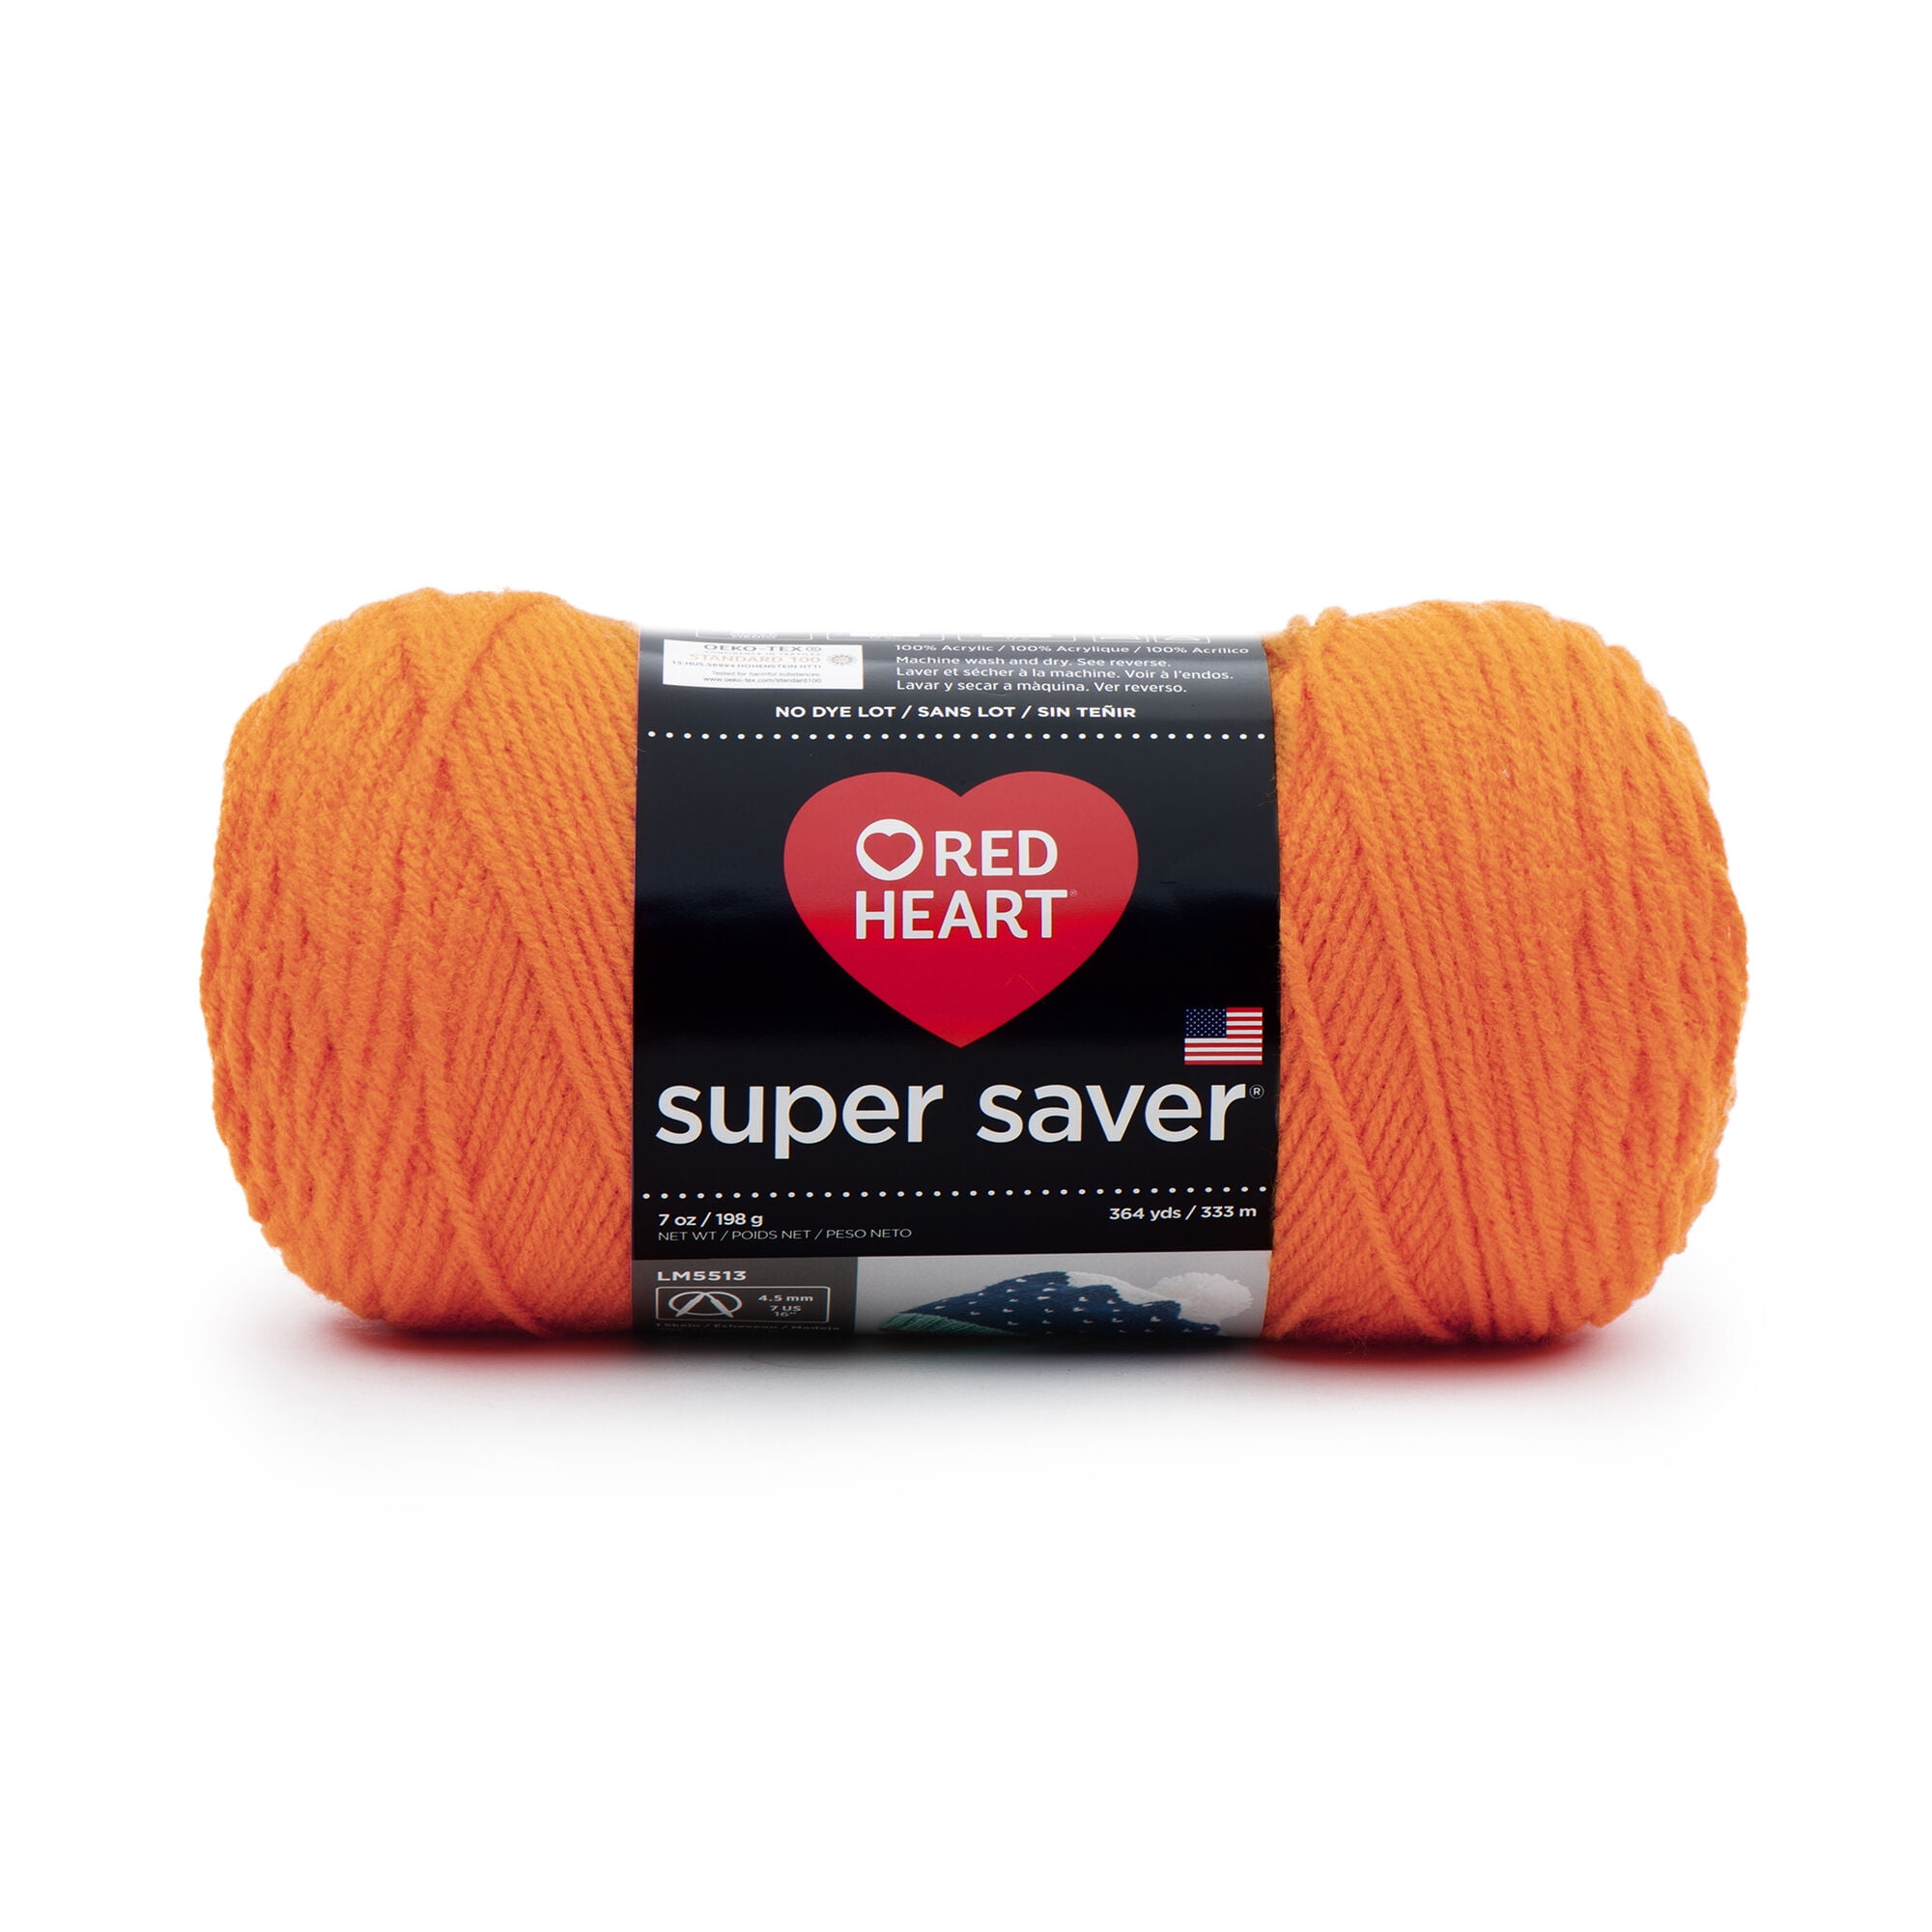 Red Heart Super 4 Medium Acrylic Yarn, Pumpkin 7oz/198g, Walmart.com